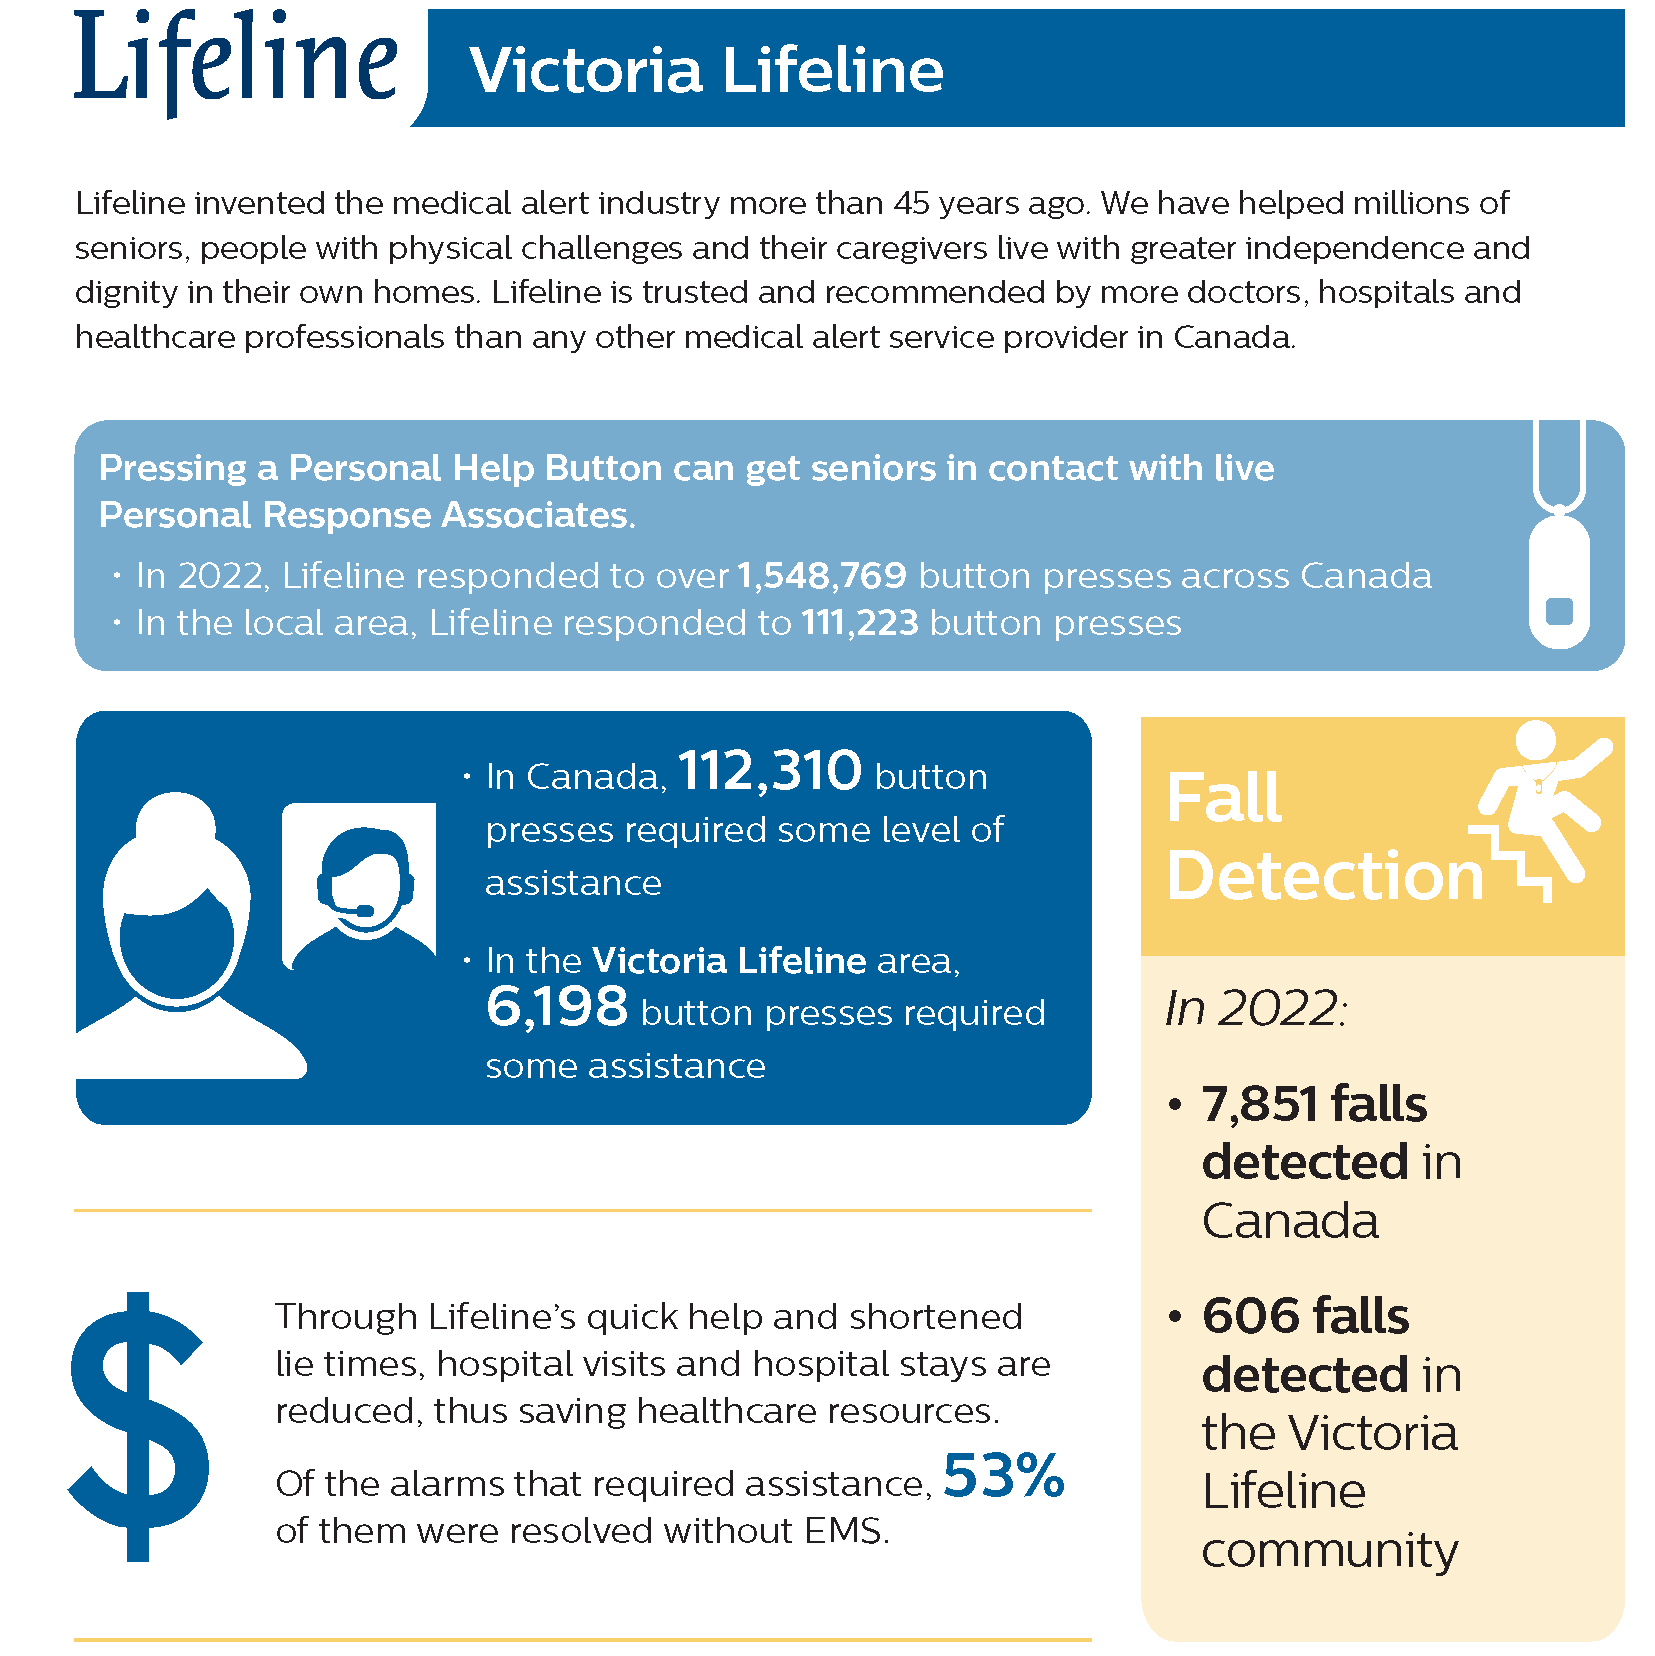 Annual Victoria Lifeline program statistics